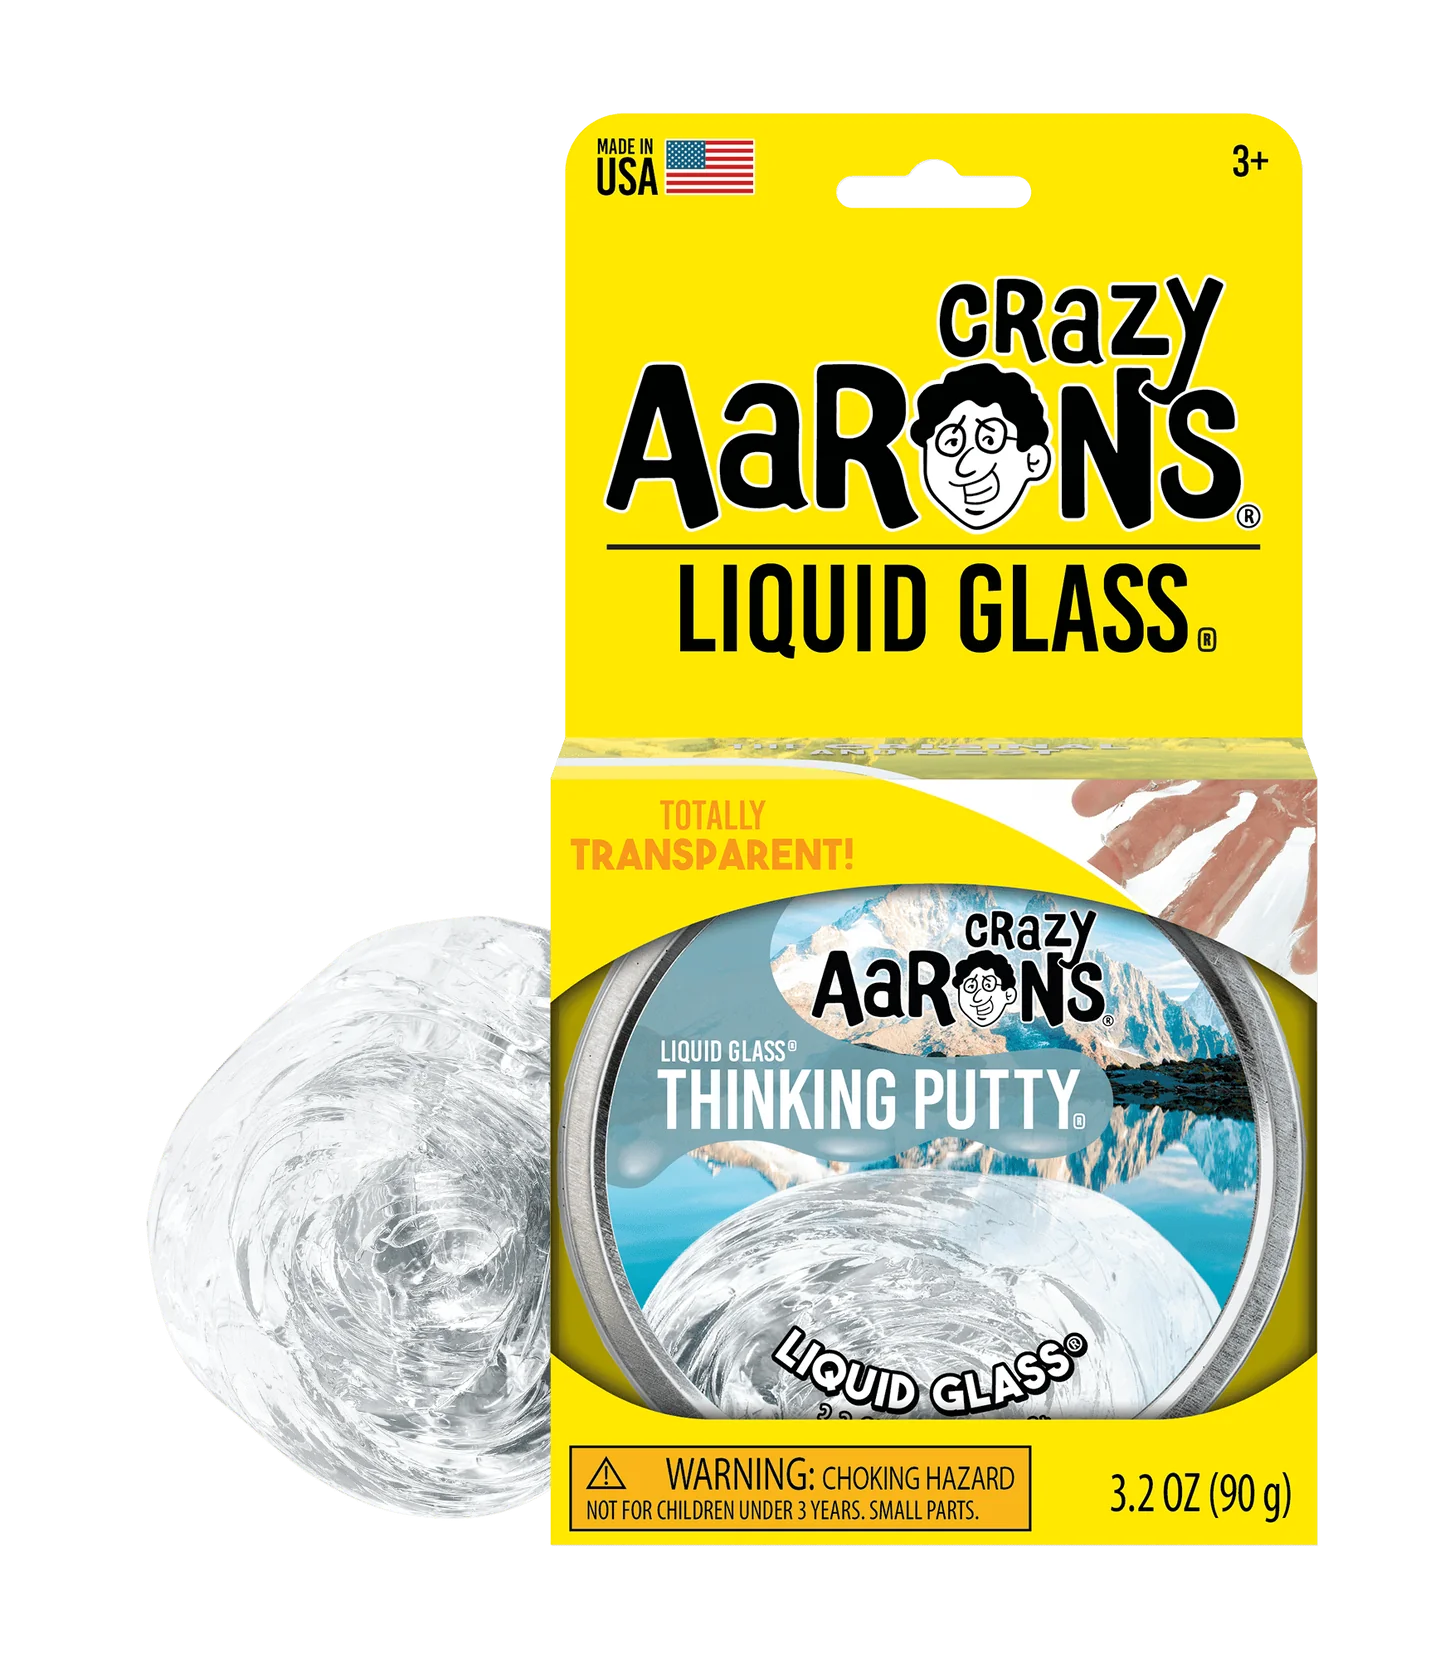 Crazy Aaron's Crazy Aaron's Thinking Putty 4" Liquid Glass